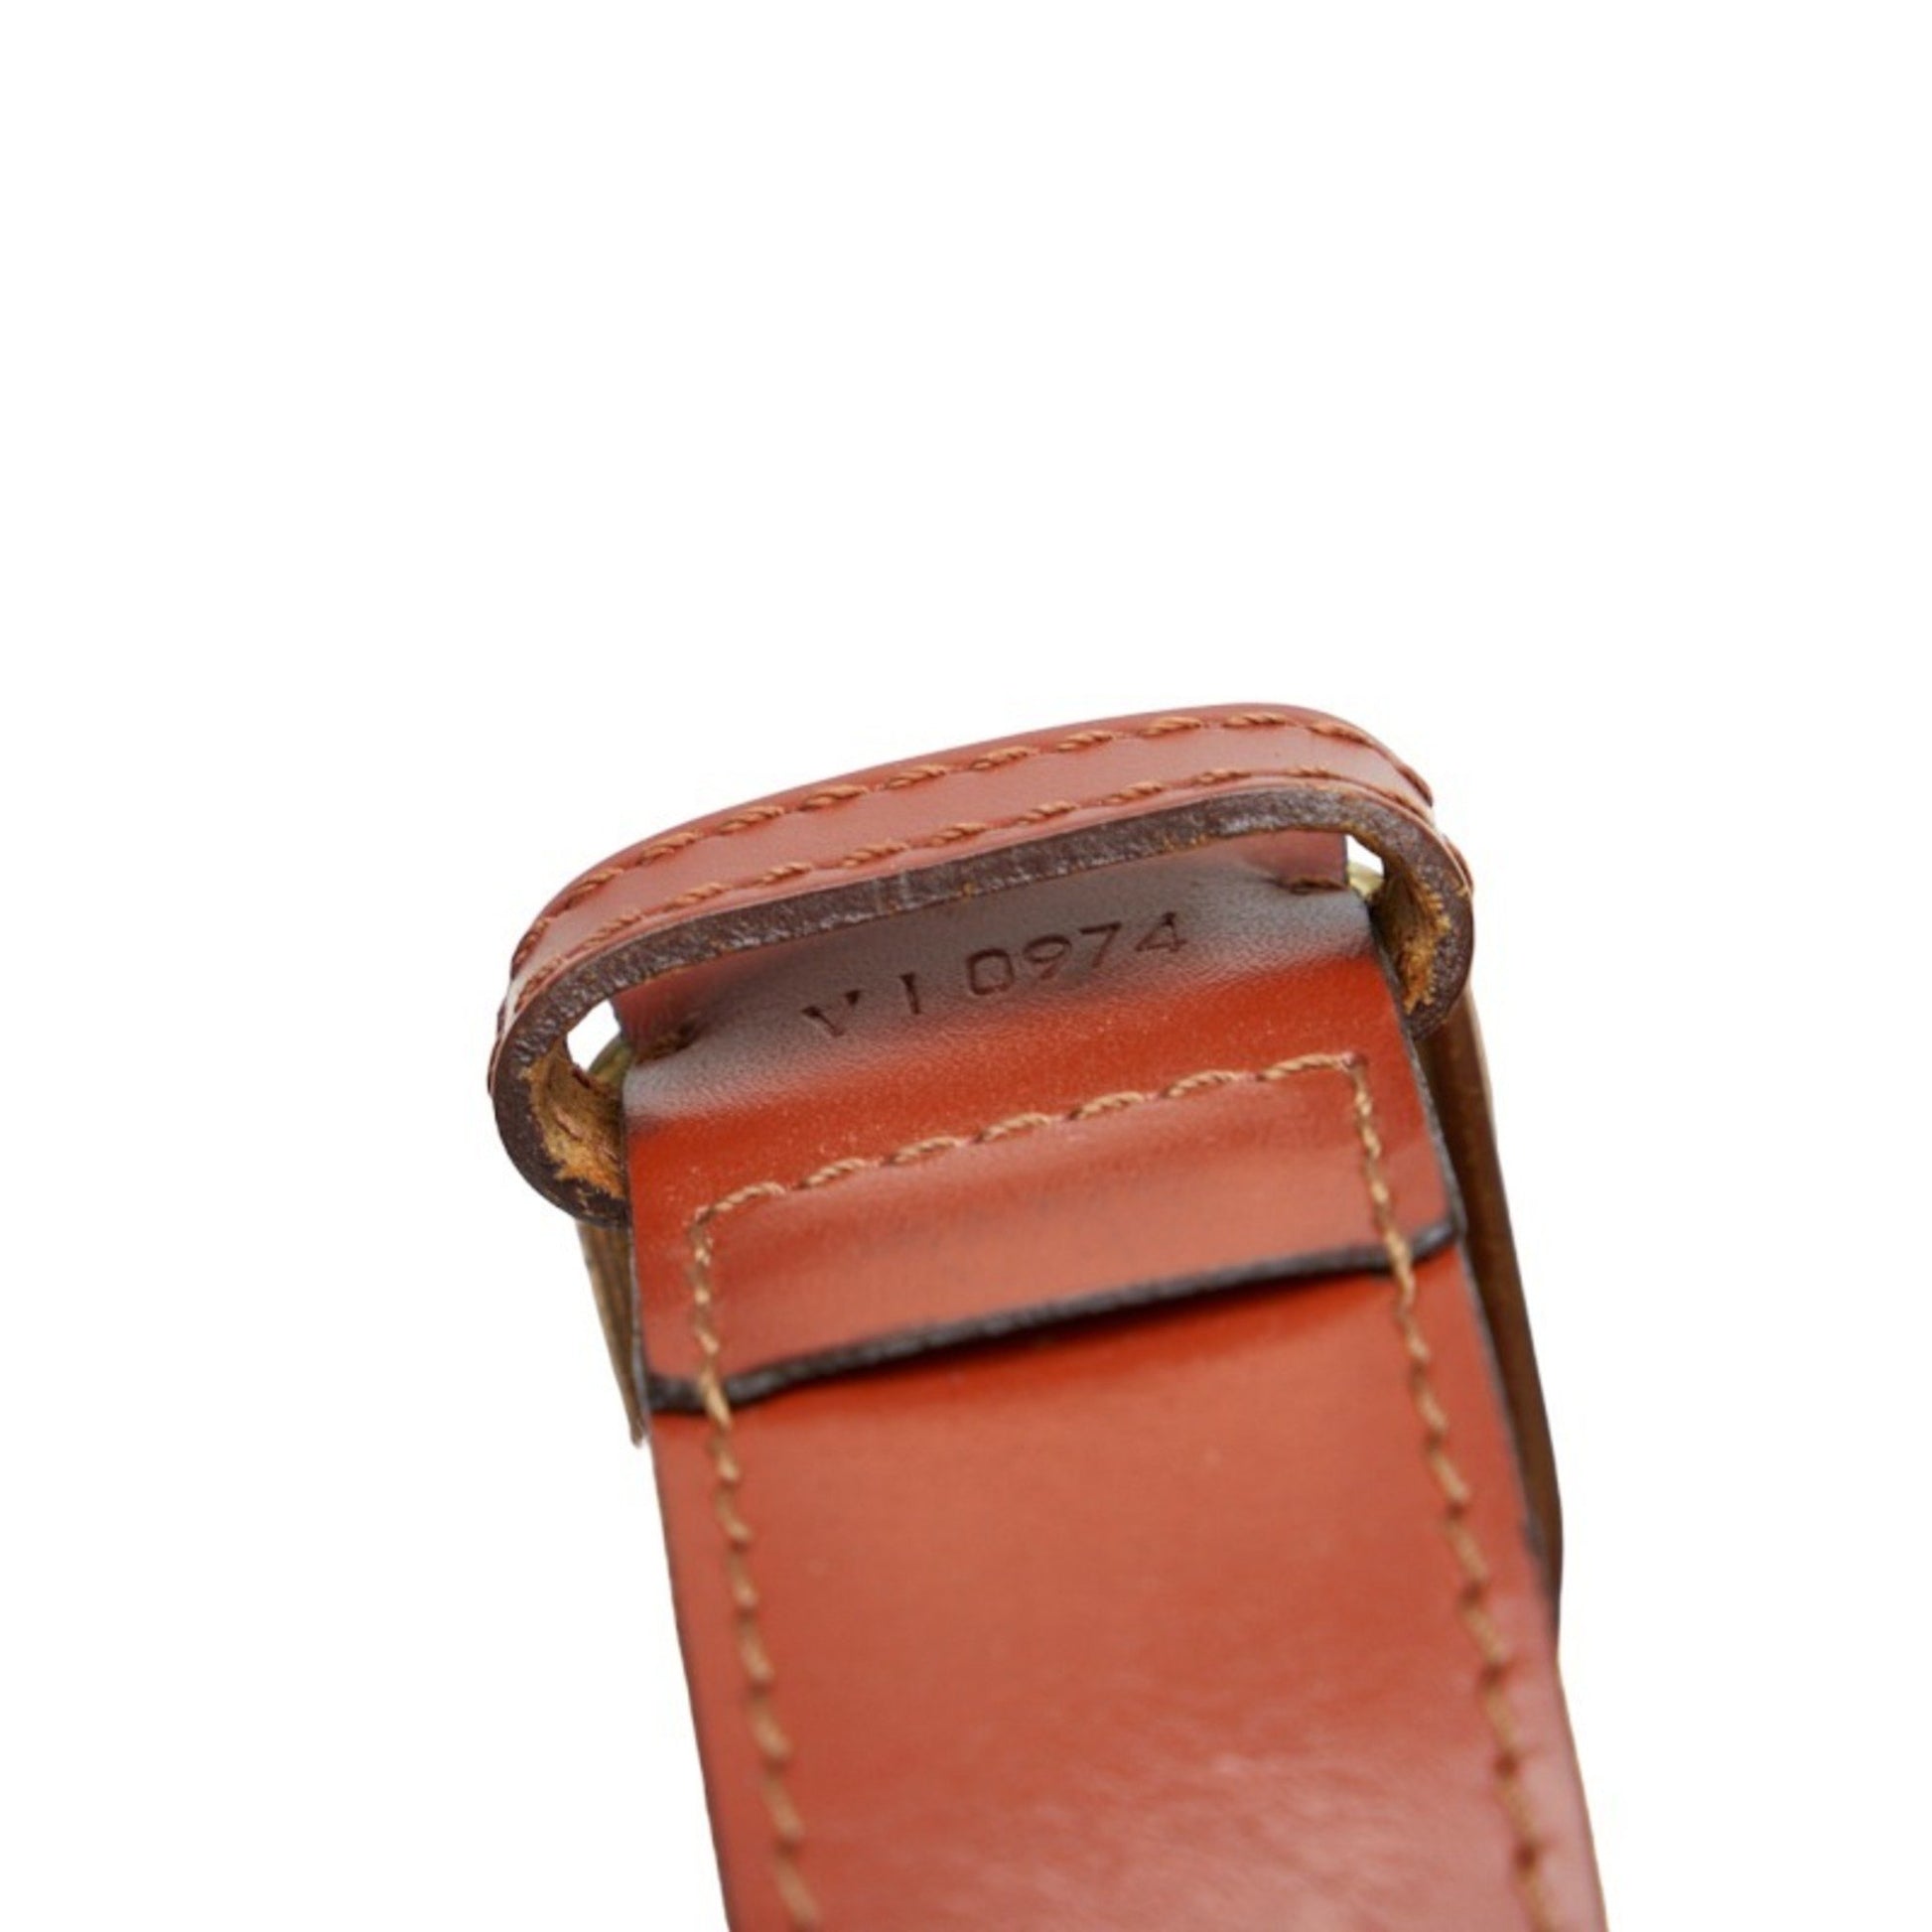 Louis Vuitton Epi Sac De Paul GM Shoulder Bag M80193 Kenya Brown